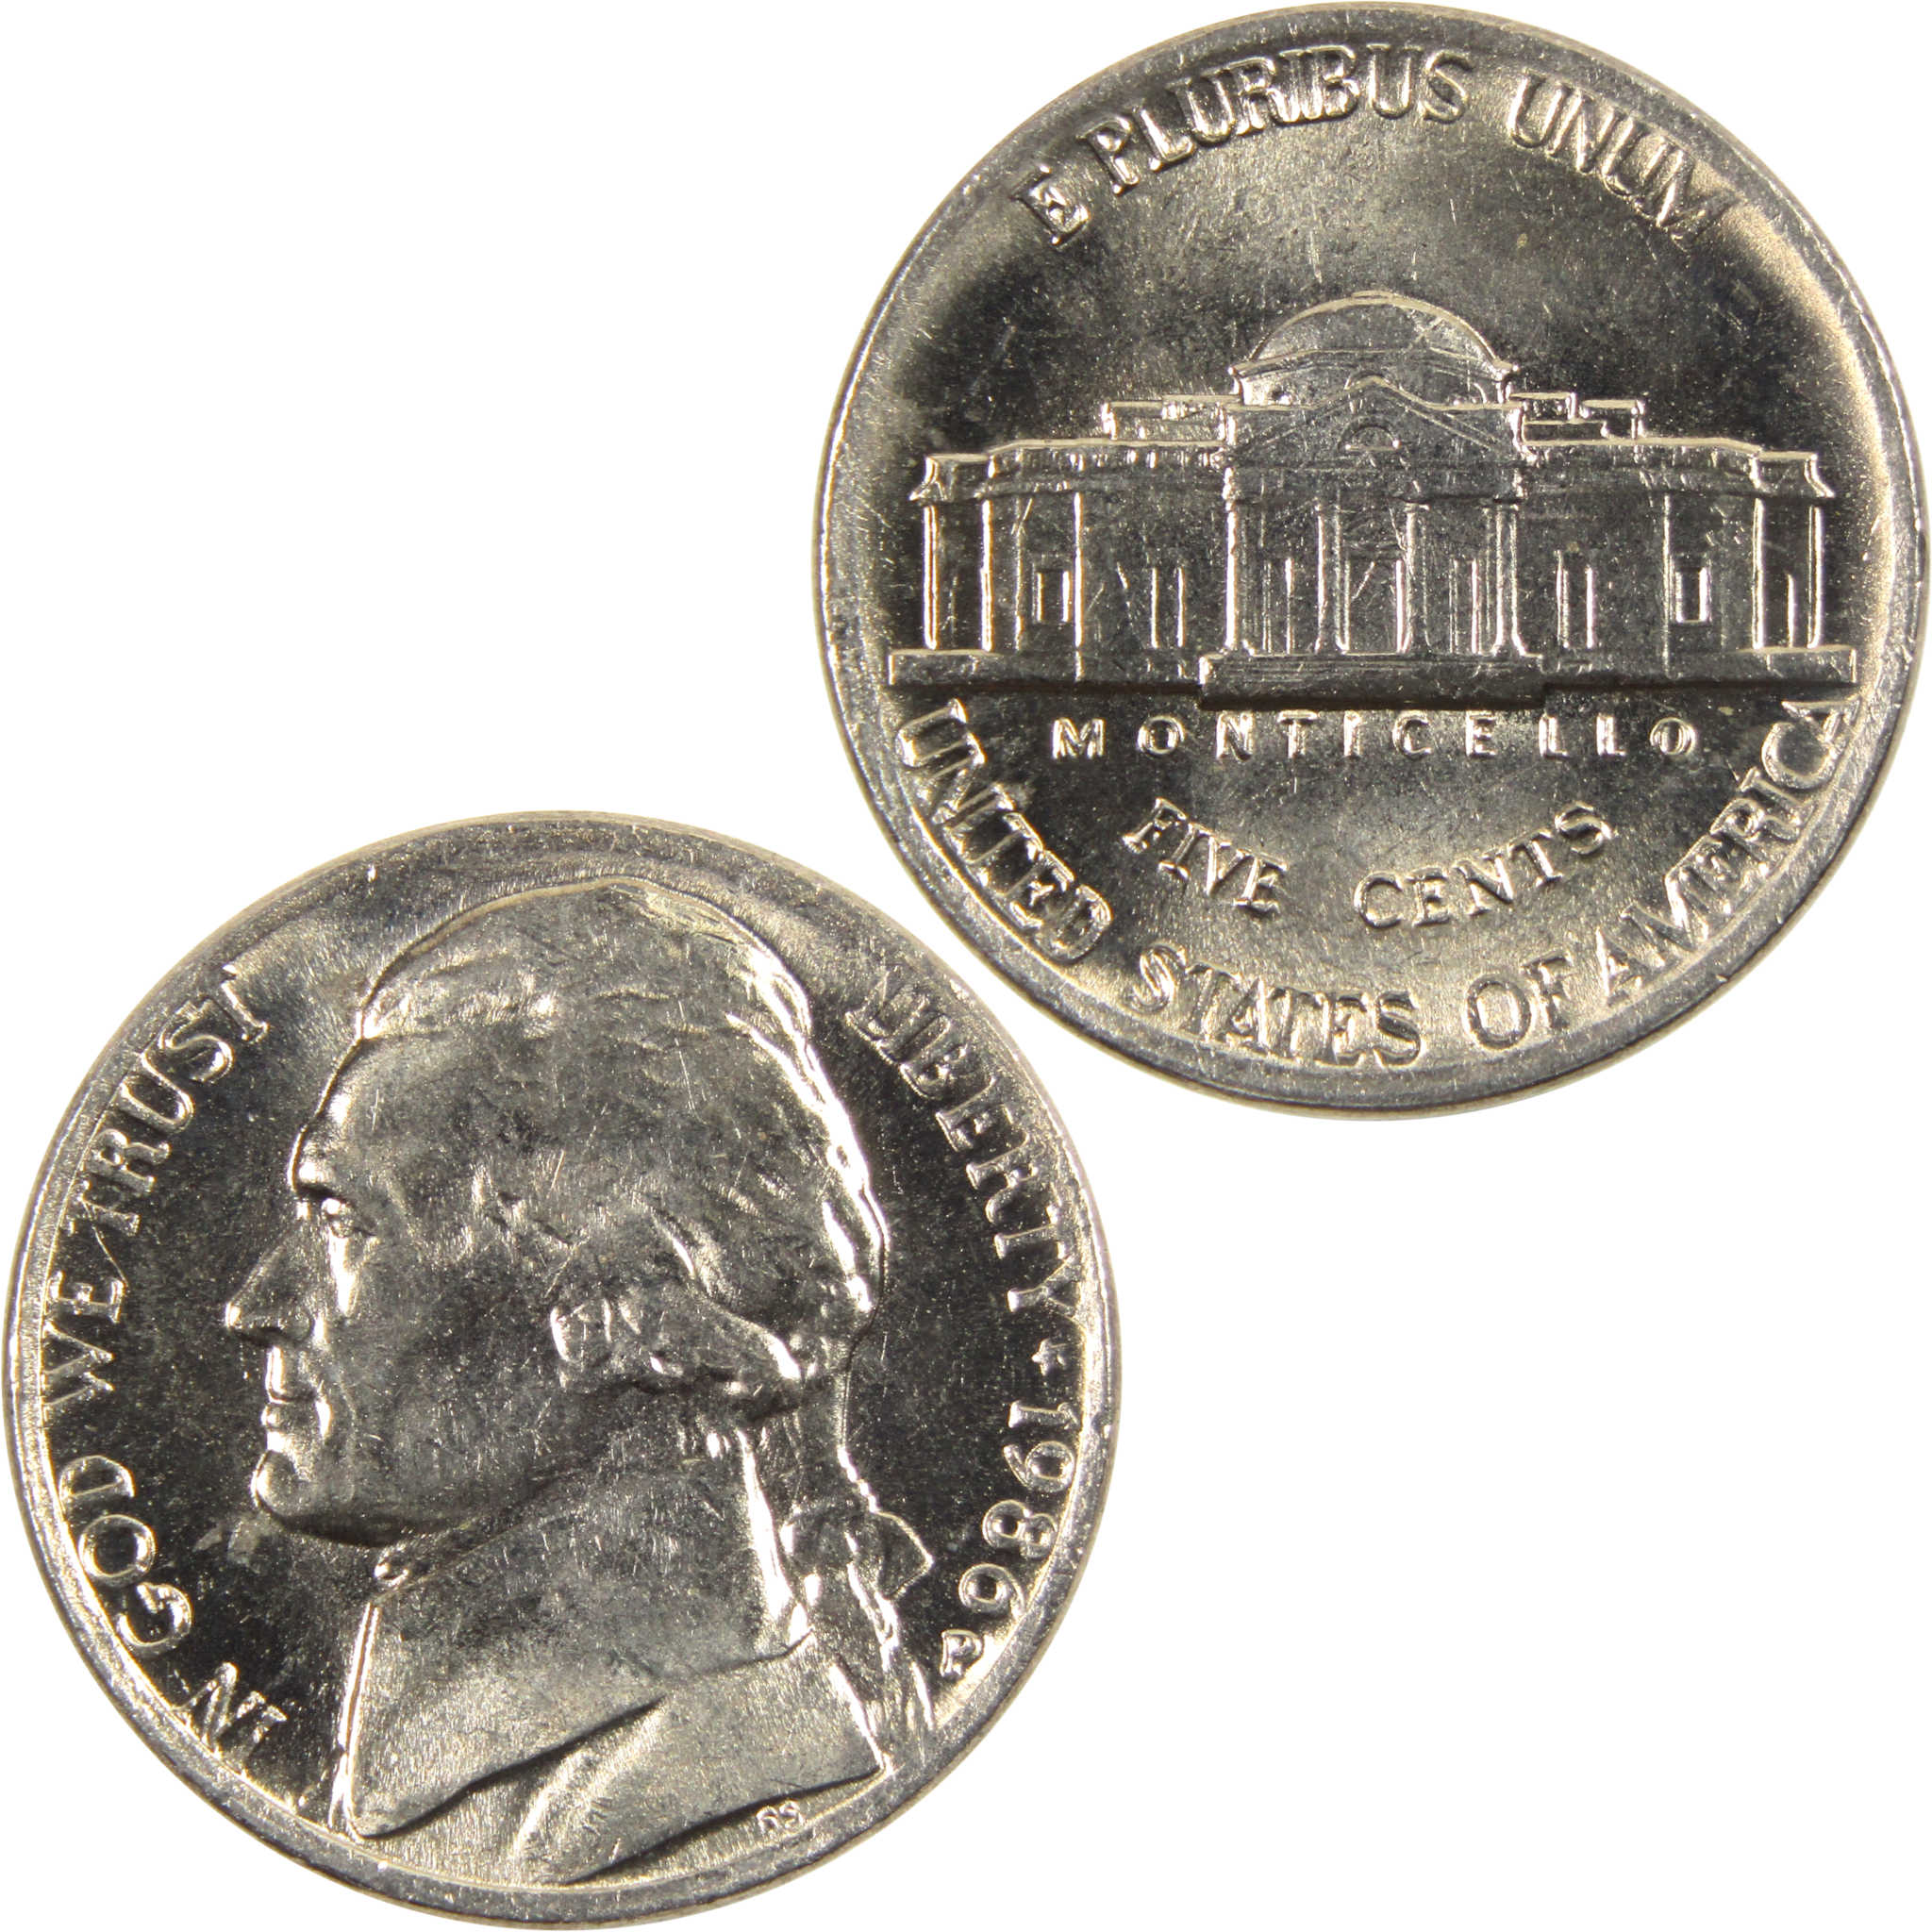 1986 P Jefferson Nickel BU Uncirculated 5c Coin